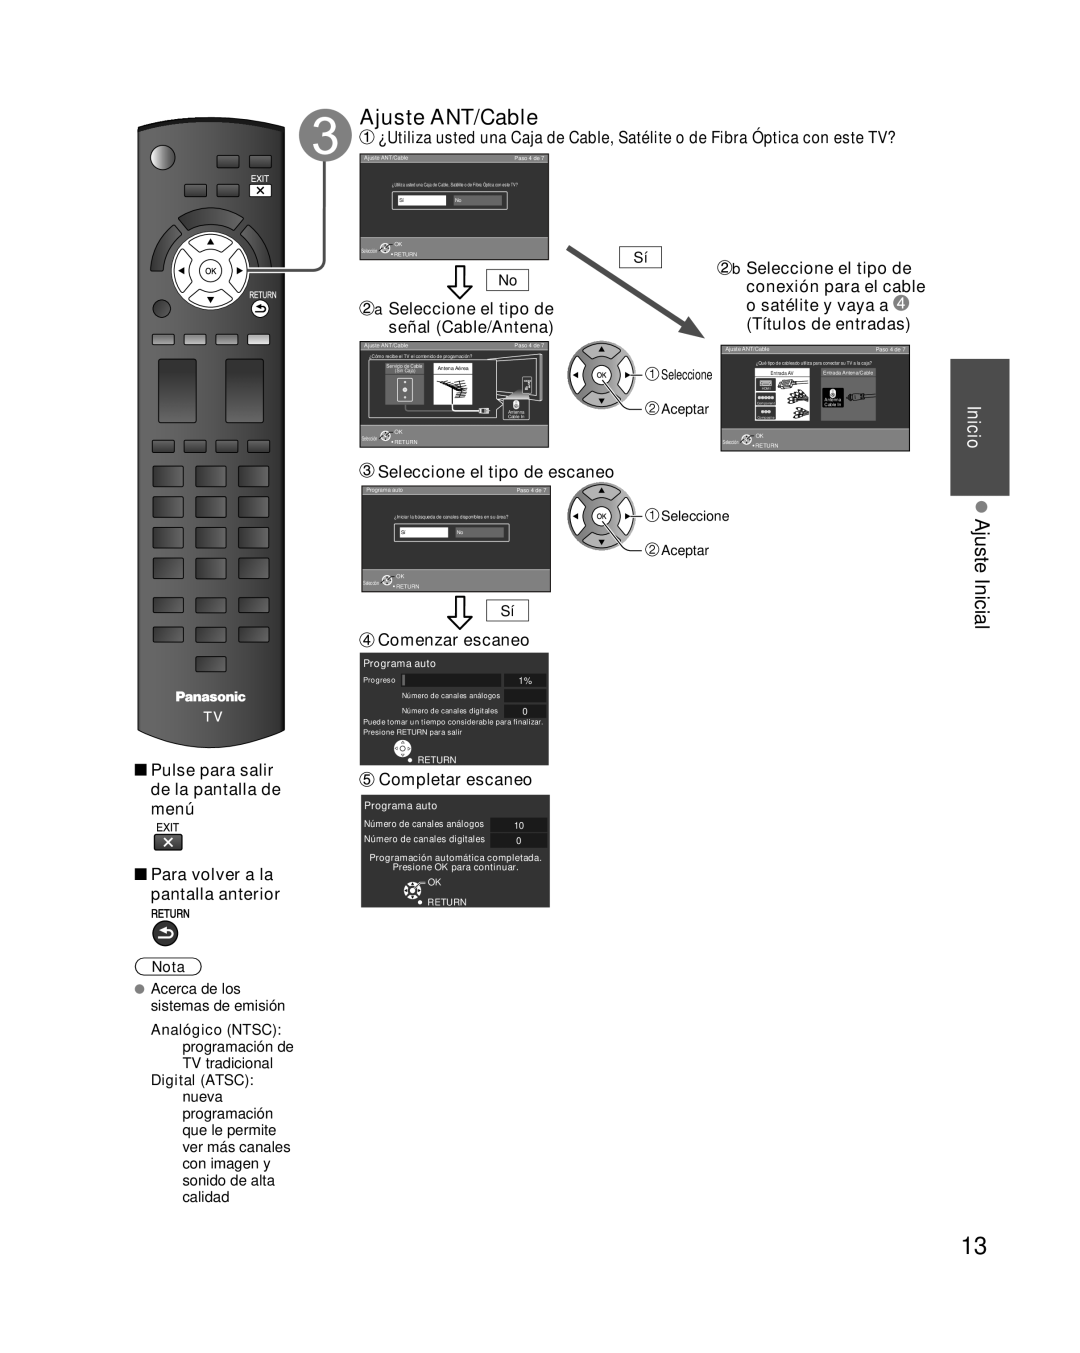 Panasonic TC-L32E3 Ajuste ANT/Cable, Ajuste Inicial, a Seleccione el tipo de señal Cable/Antena, b Seleccione el tipo de 